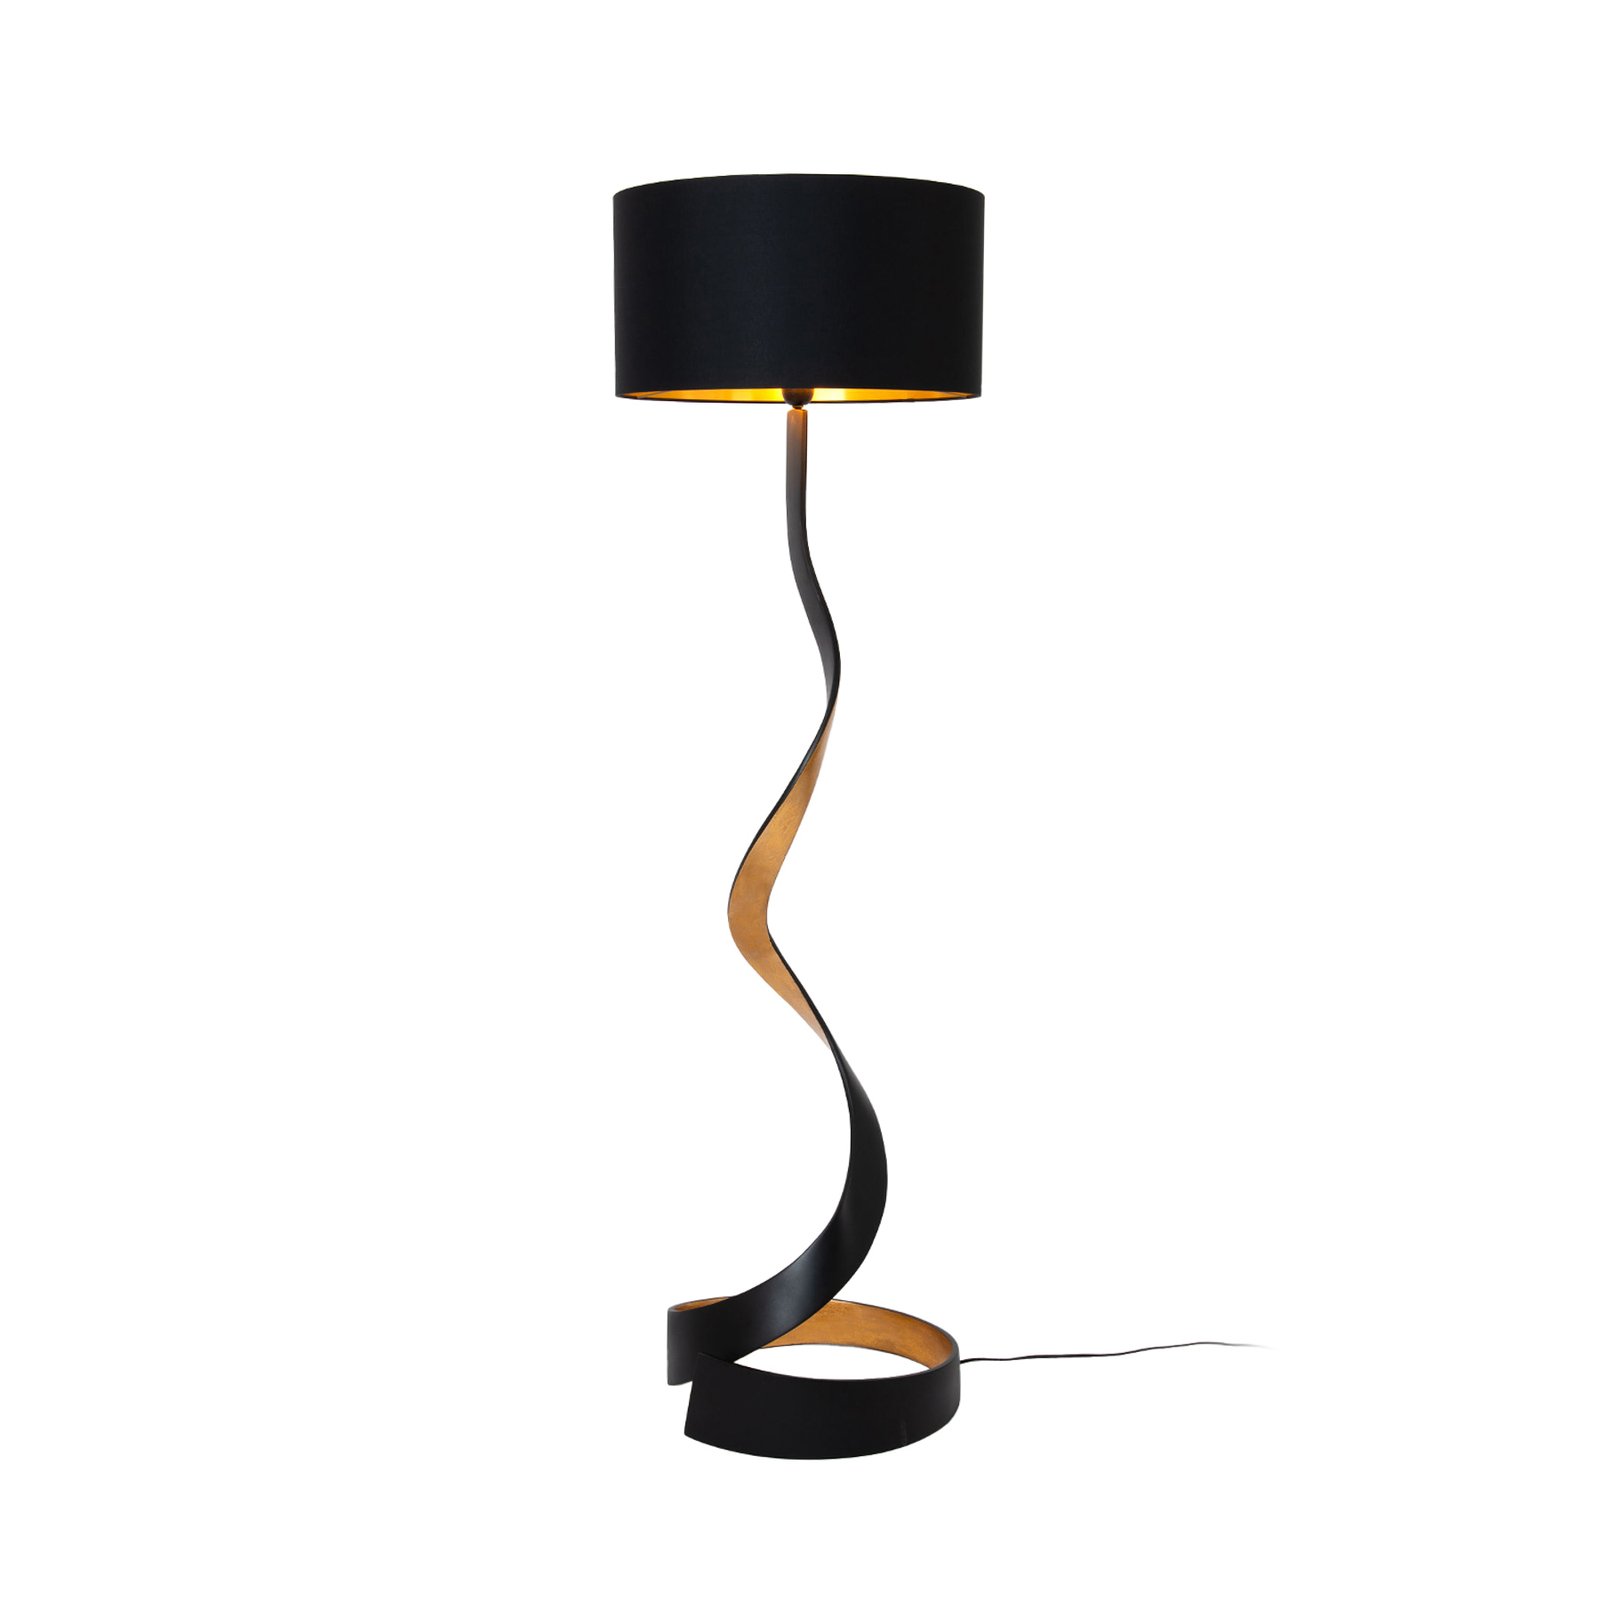 Vloerlamp Vortice, zwart/goud, hoogte 157 cm, ijzer